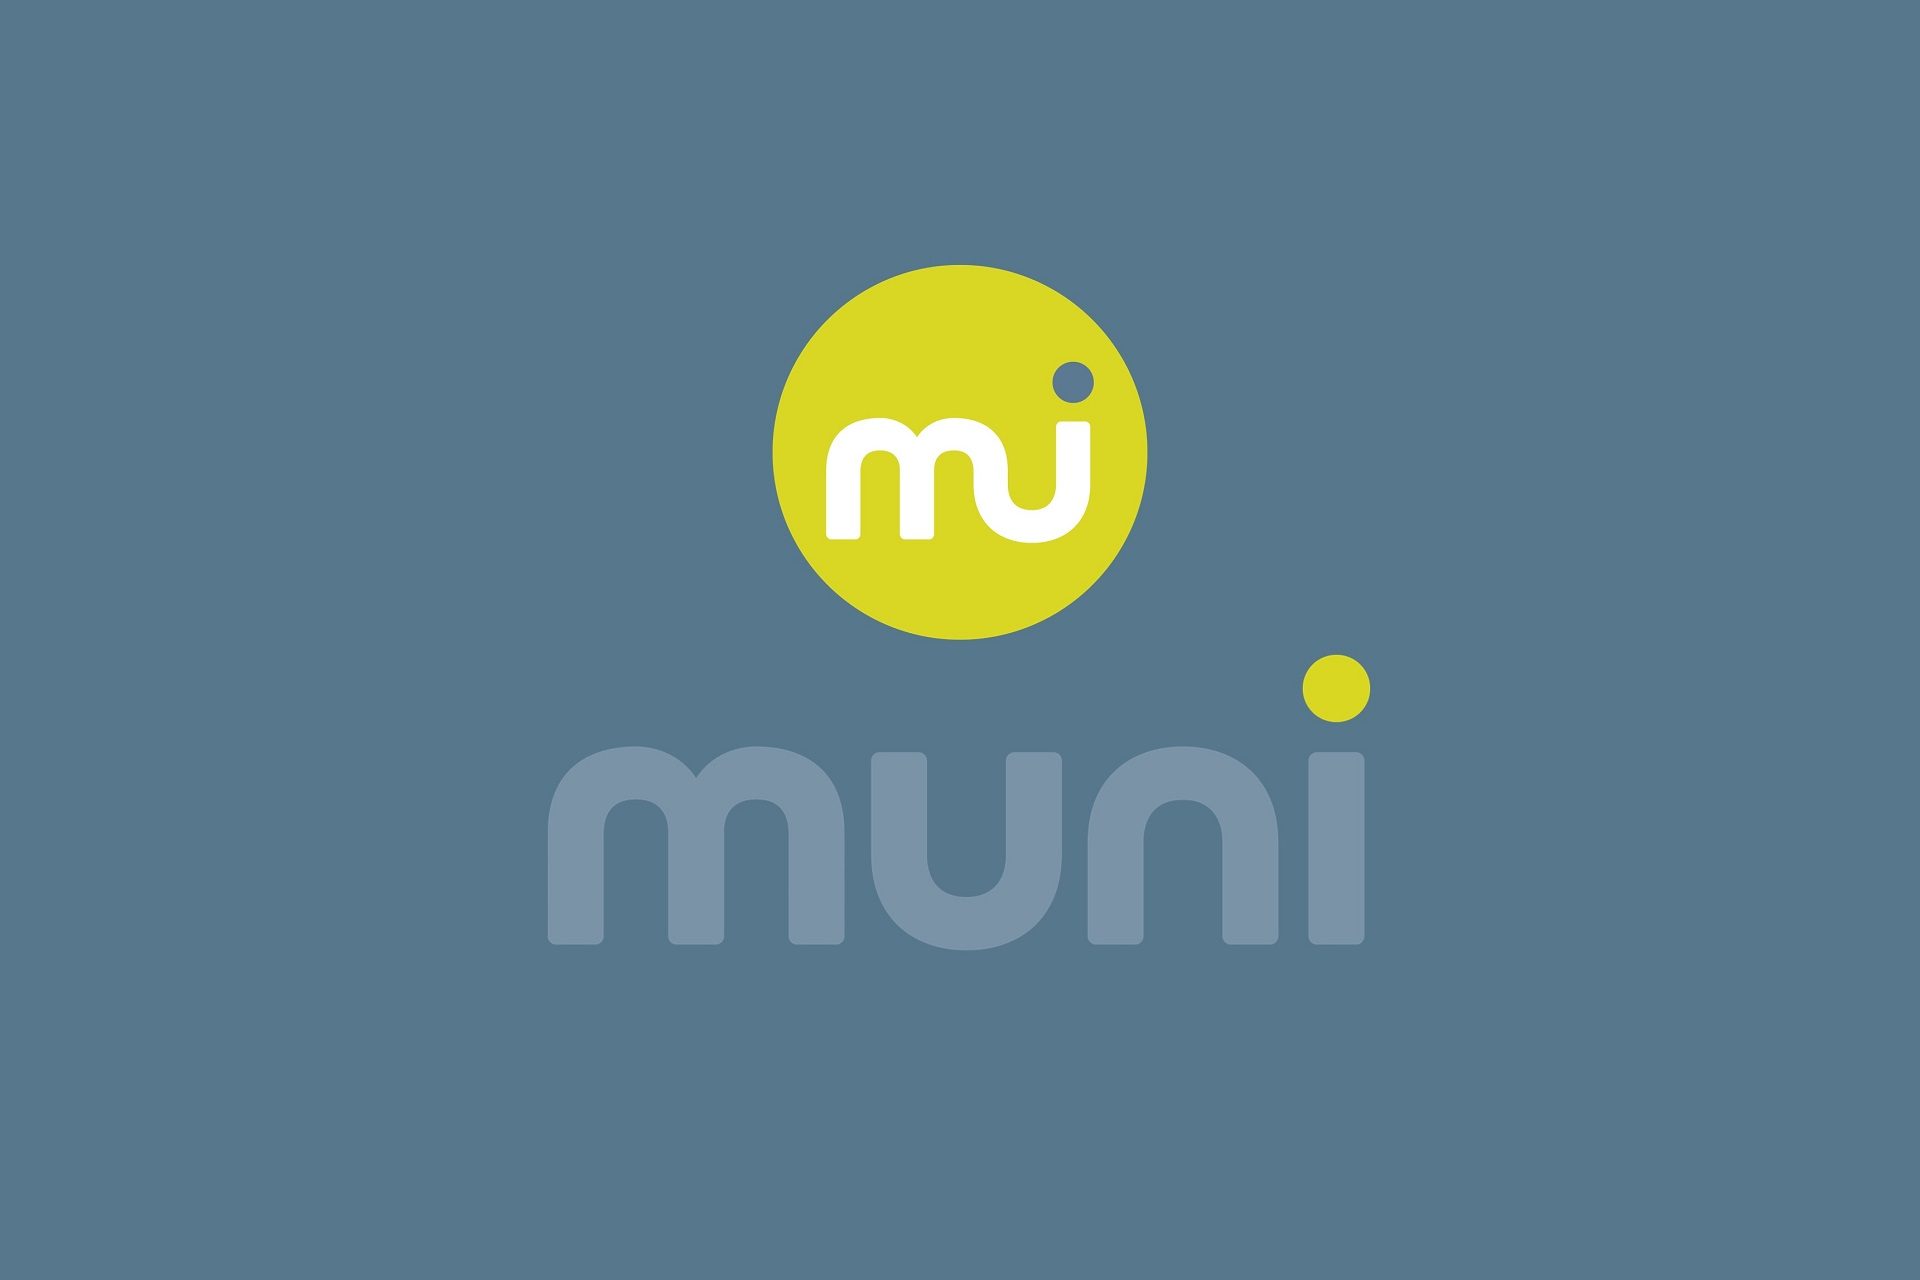 Muni App Logos